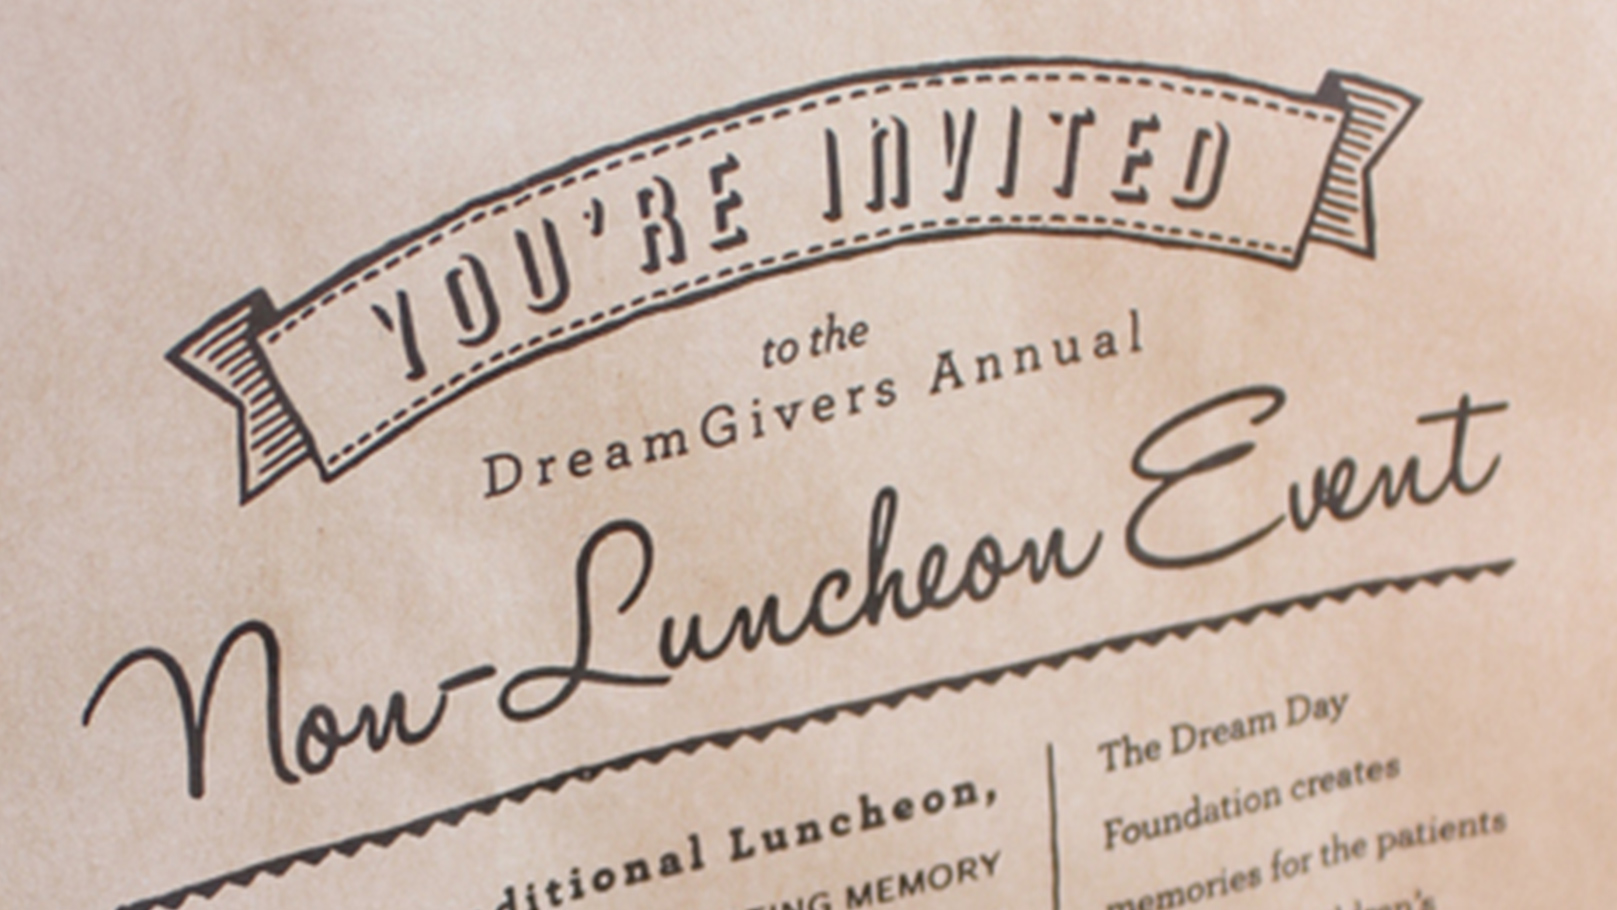 Dream Day Foundation Lunch Note Fundraiser Campaign Invitation